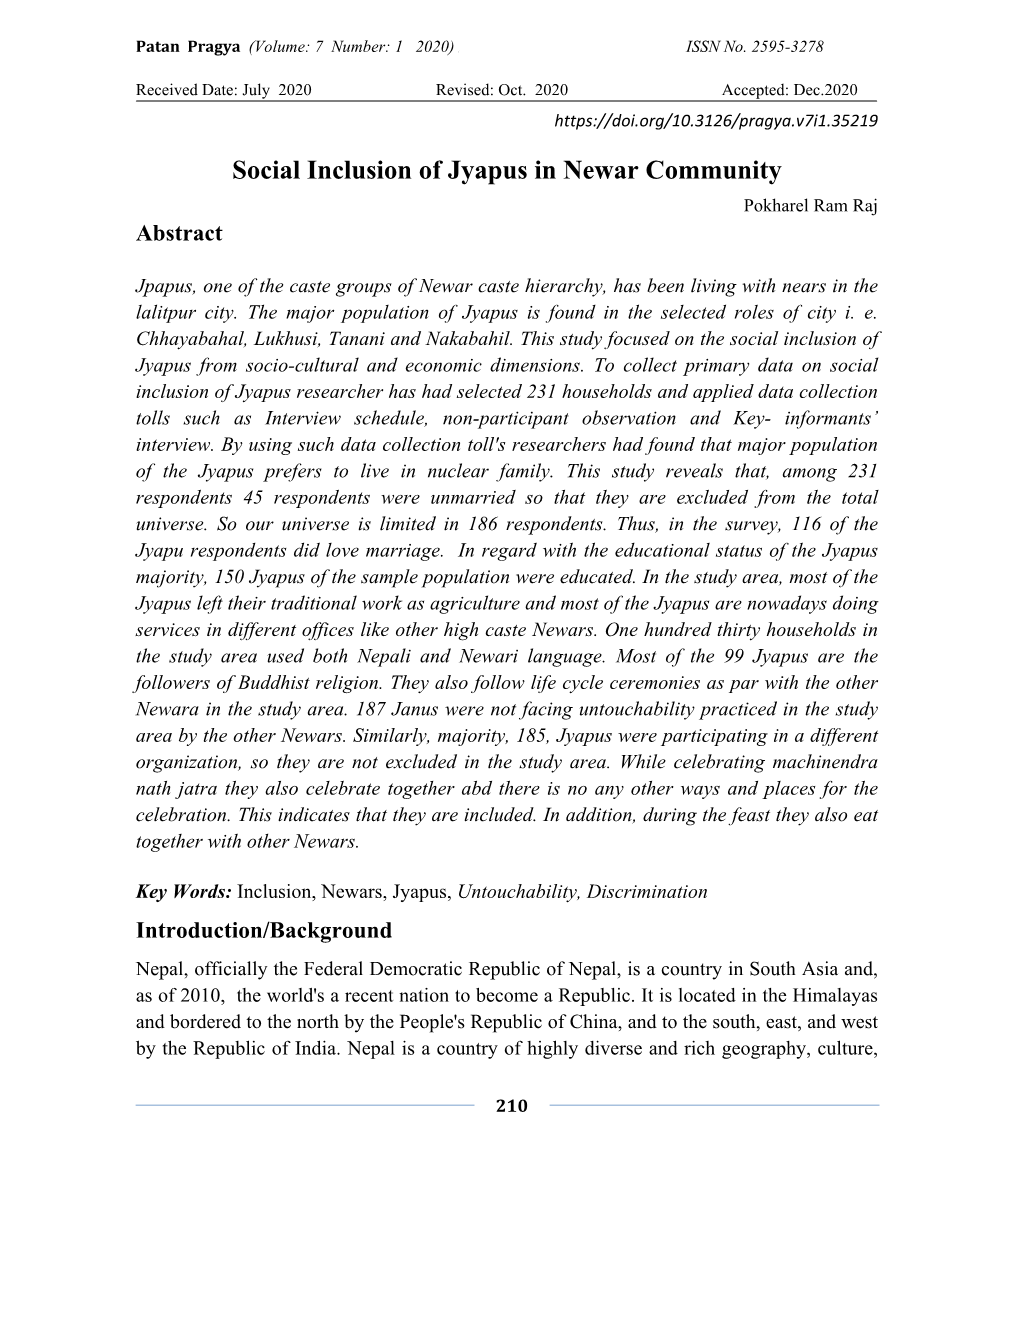 Social Inclusion of Jyapus in Newar Community Pokharel Ram Raj Abstract